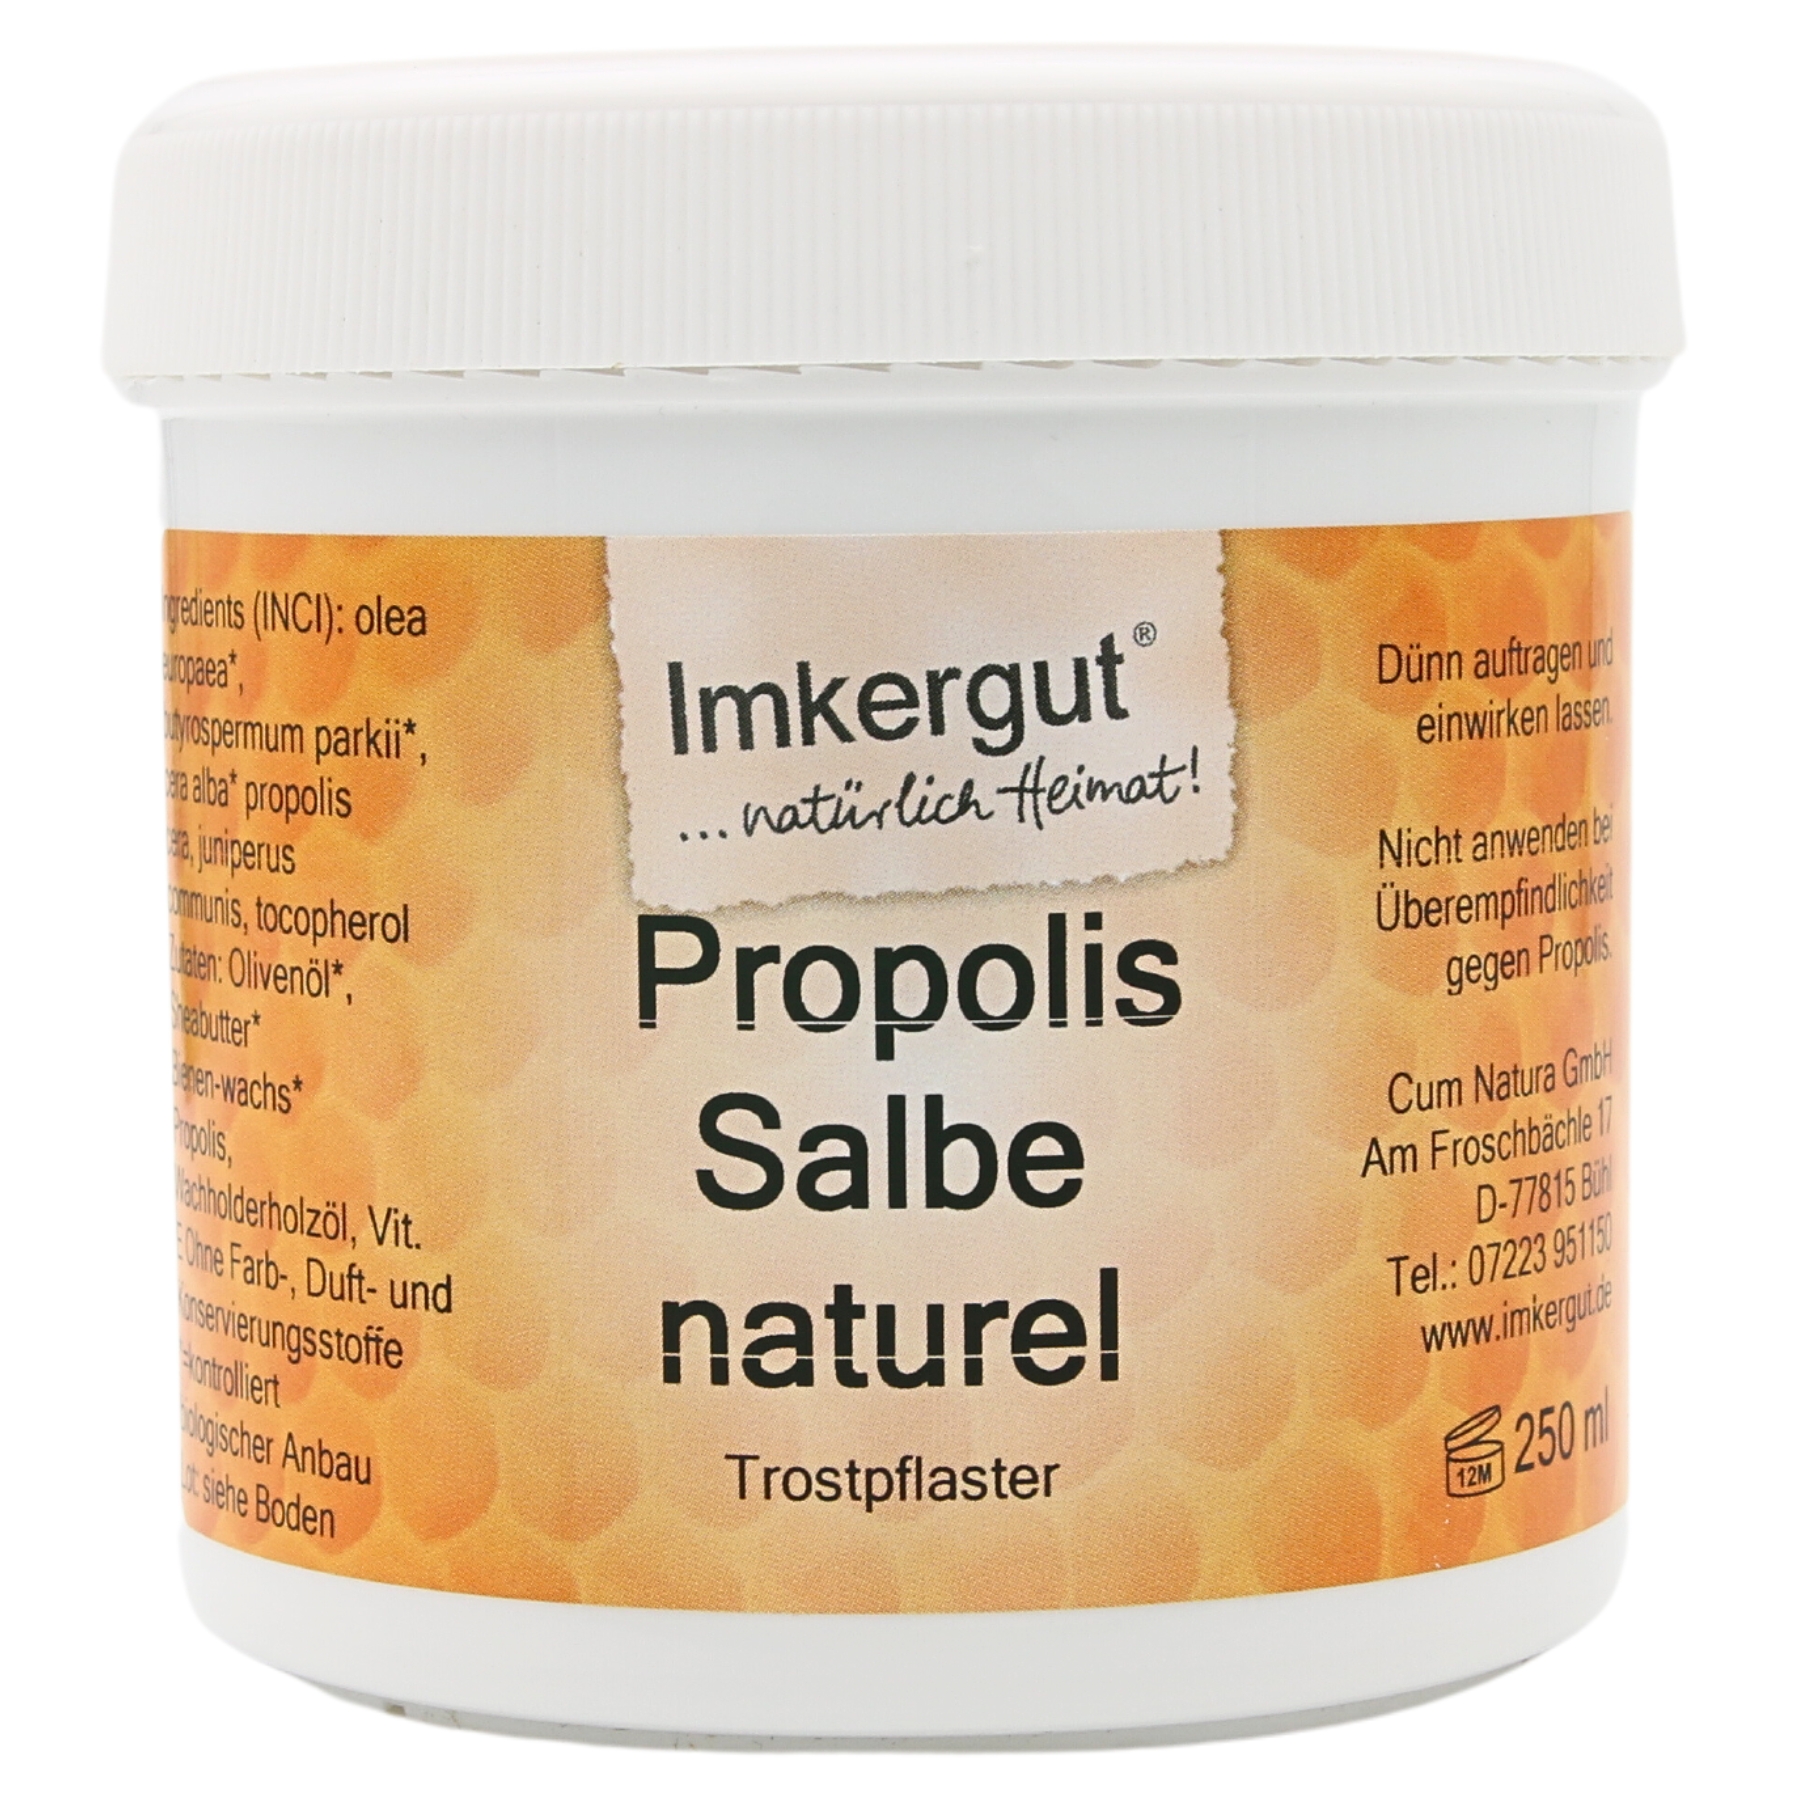 Propolis Salbe naturel 250ml